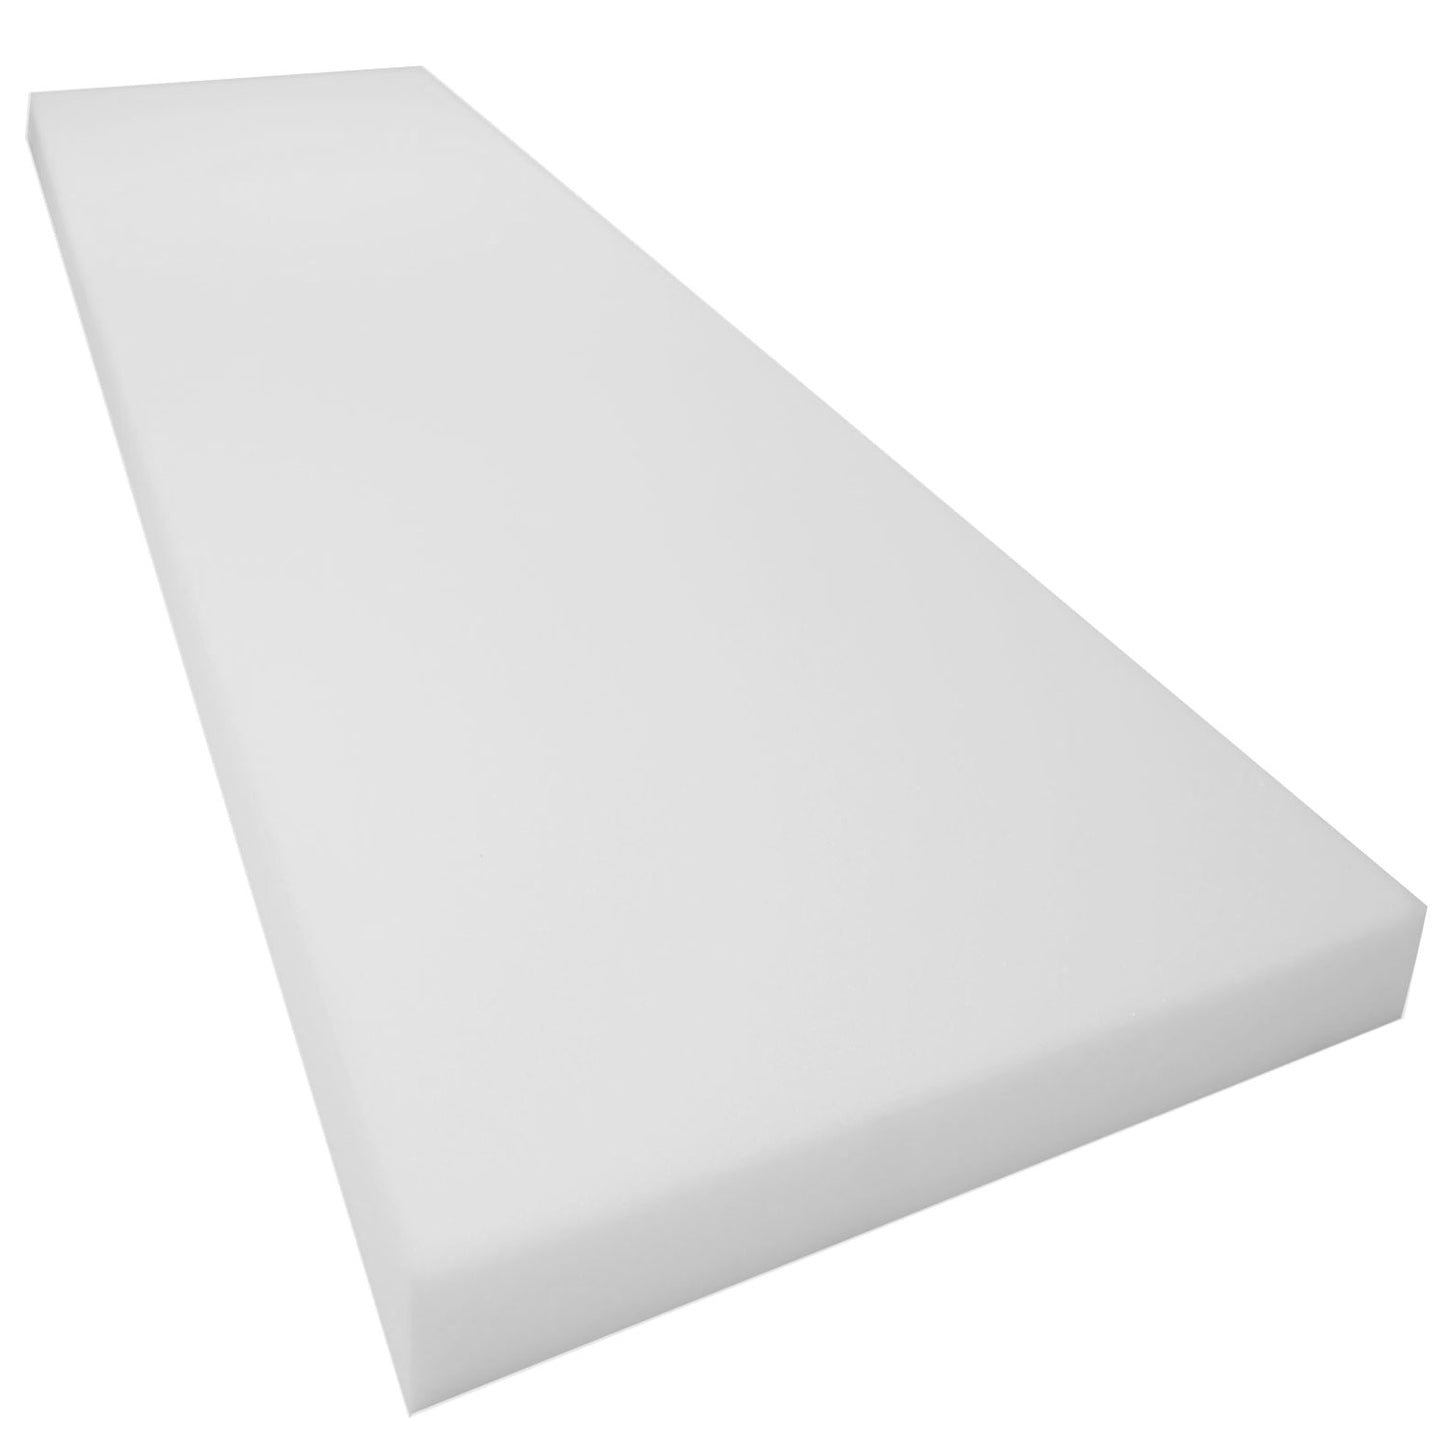 Mybecca 1" x 24"x 24" Upholstery Foam Cushion High Density (Seat Replacement, Upholstery Sheet, Foam Padding)